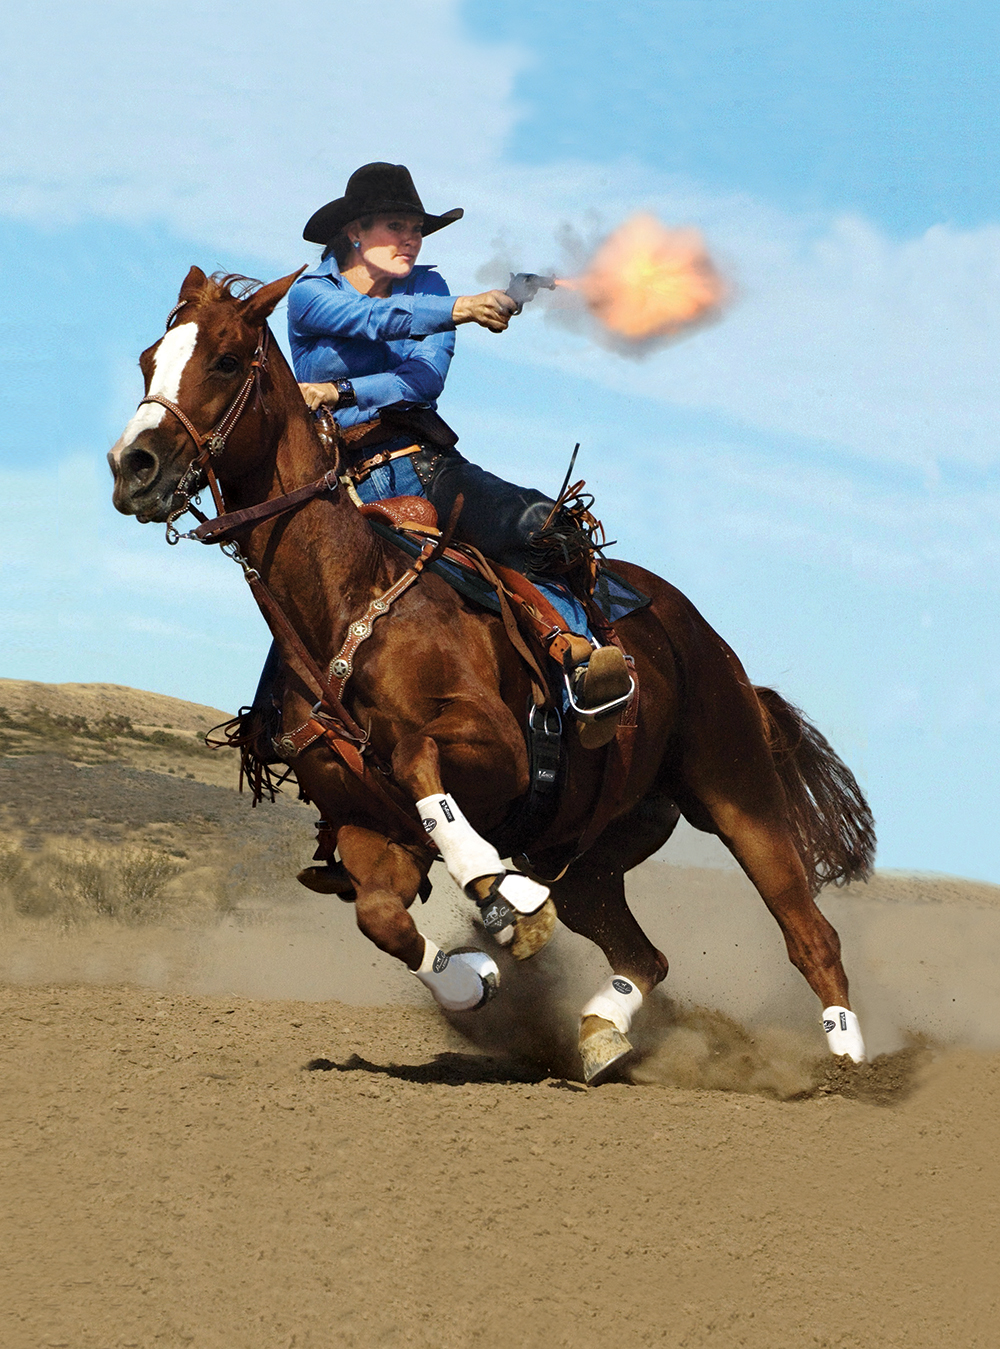 Cowboy riding cowgirl fan photo